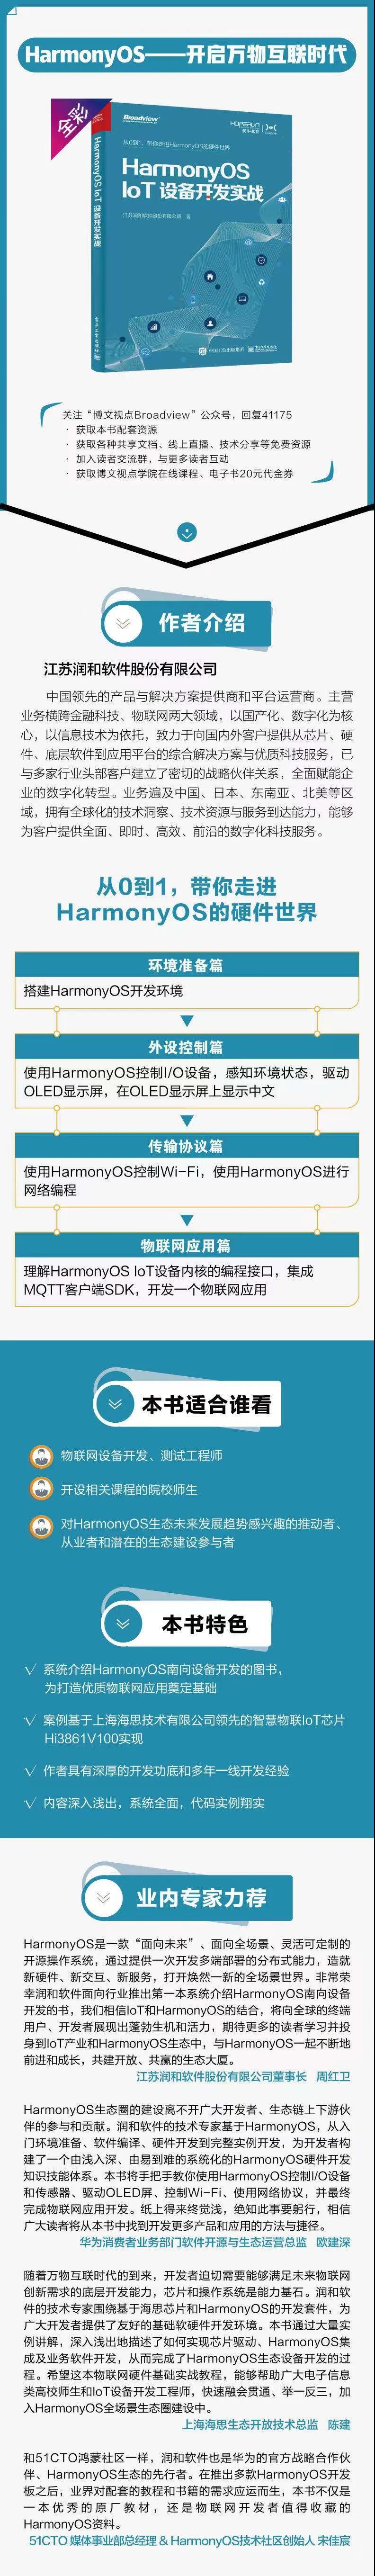 HarmonyOS IoT首著，走进万物互联的世界！-鸿蒙开发者社区